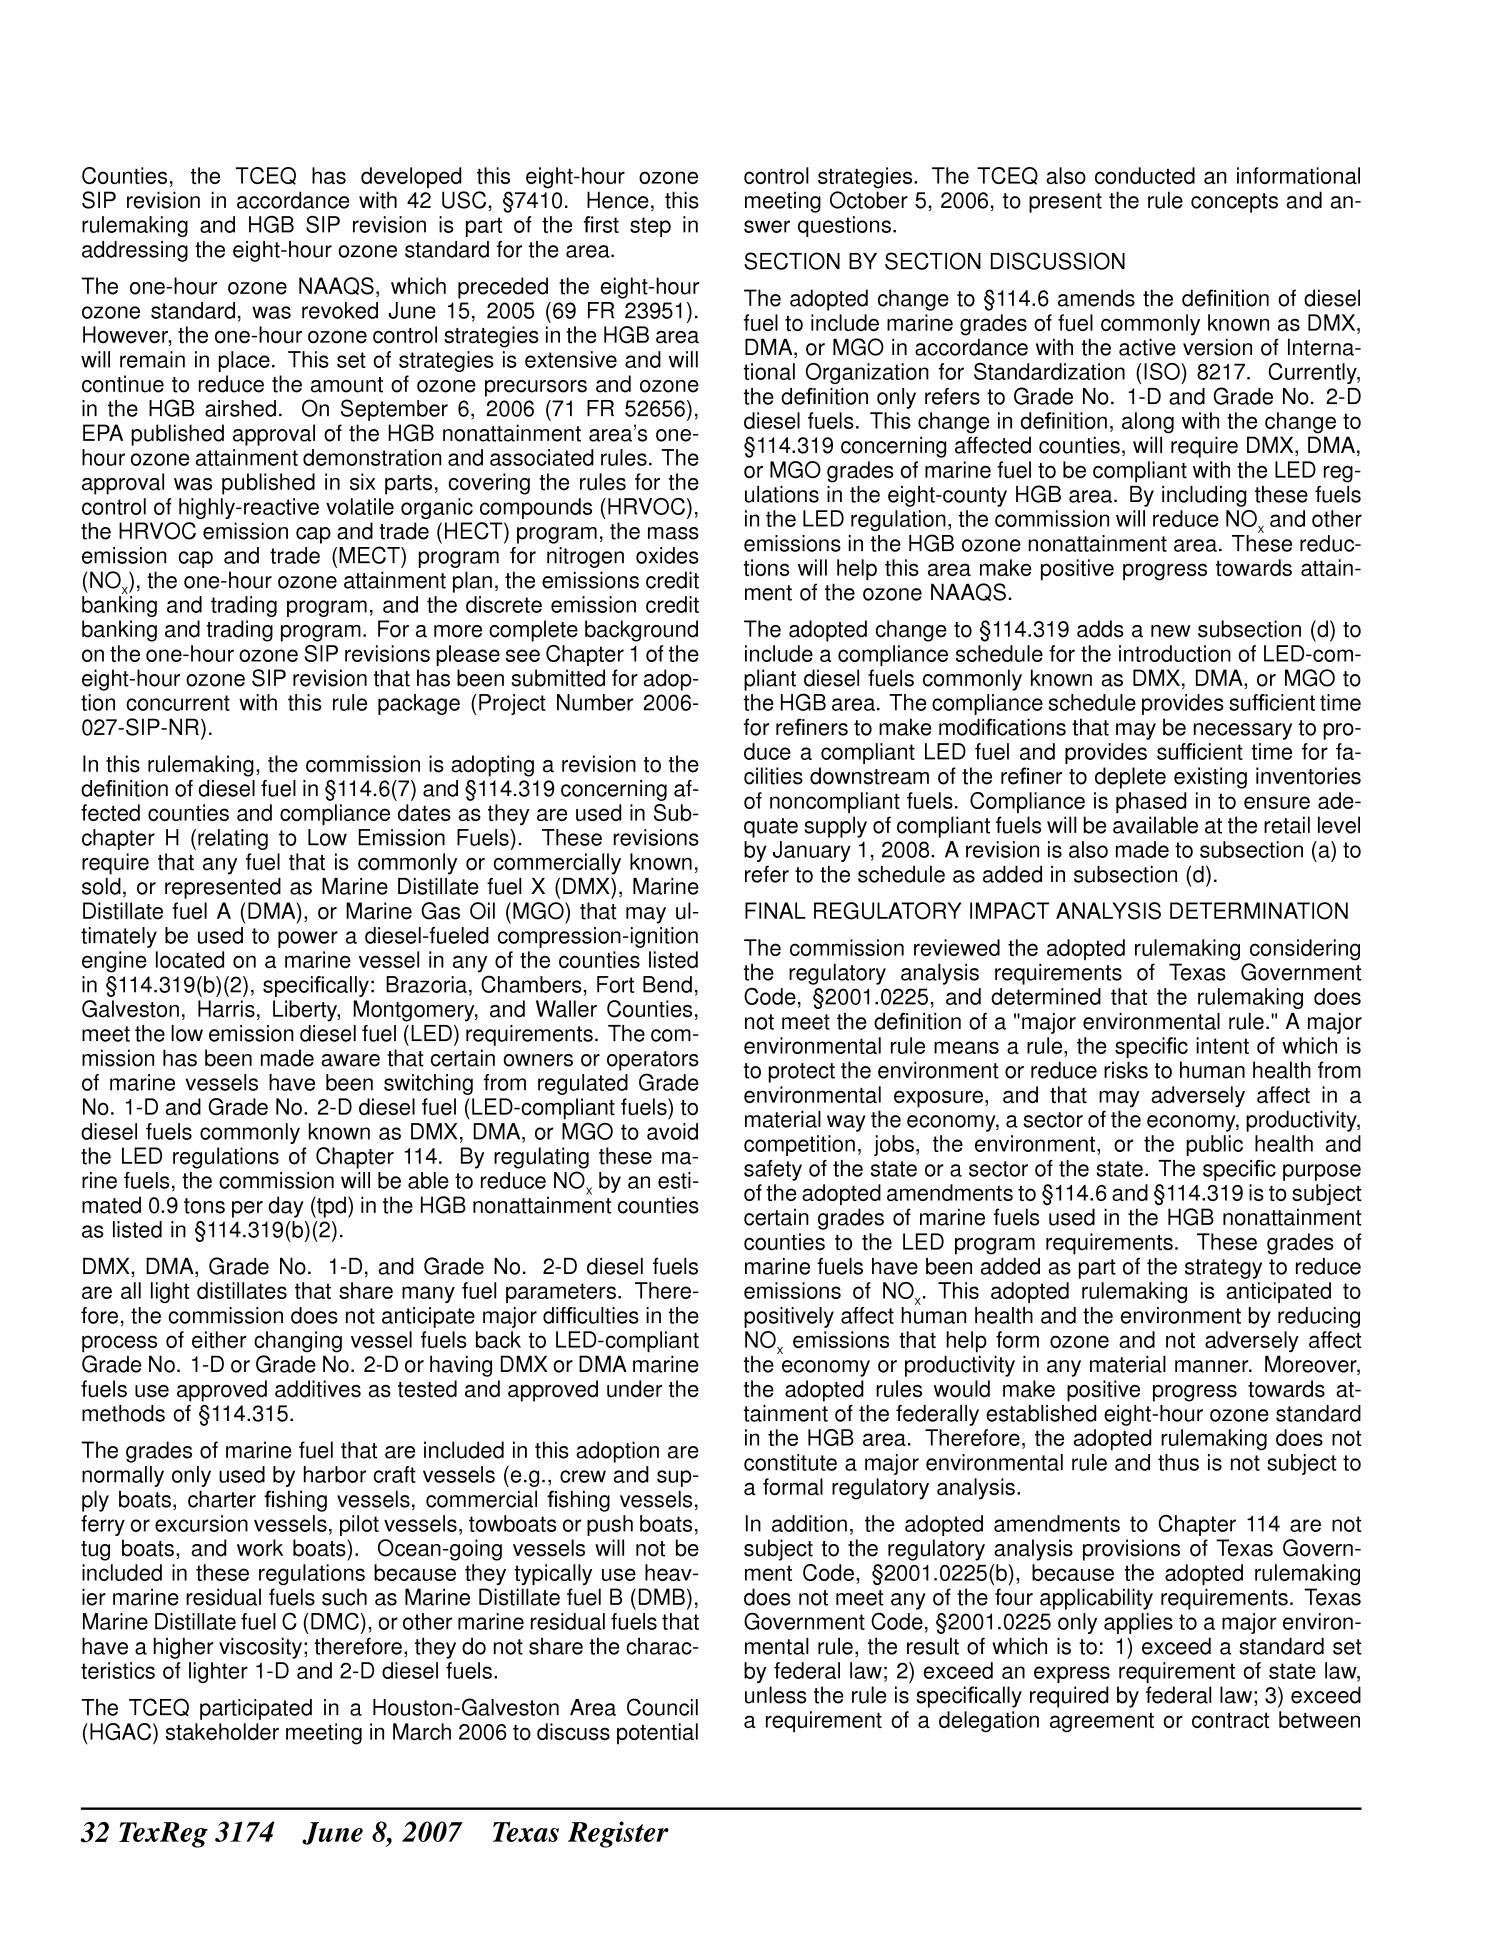 Texas Register, Volume 32, Number 23, Pages 3077-3422, June 8, 2007
                                                
                                                    3174
                                                